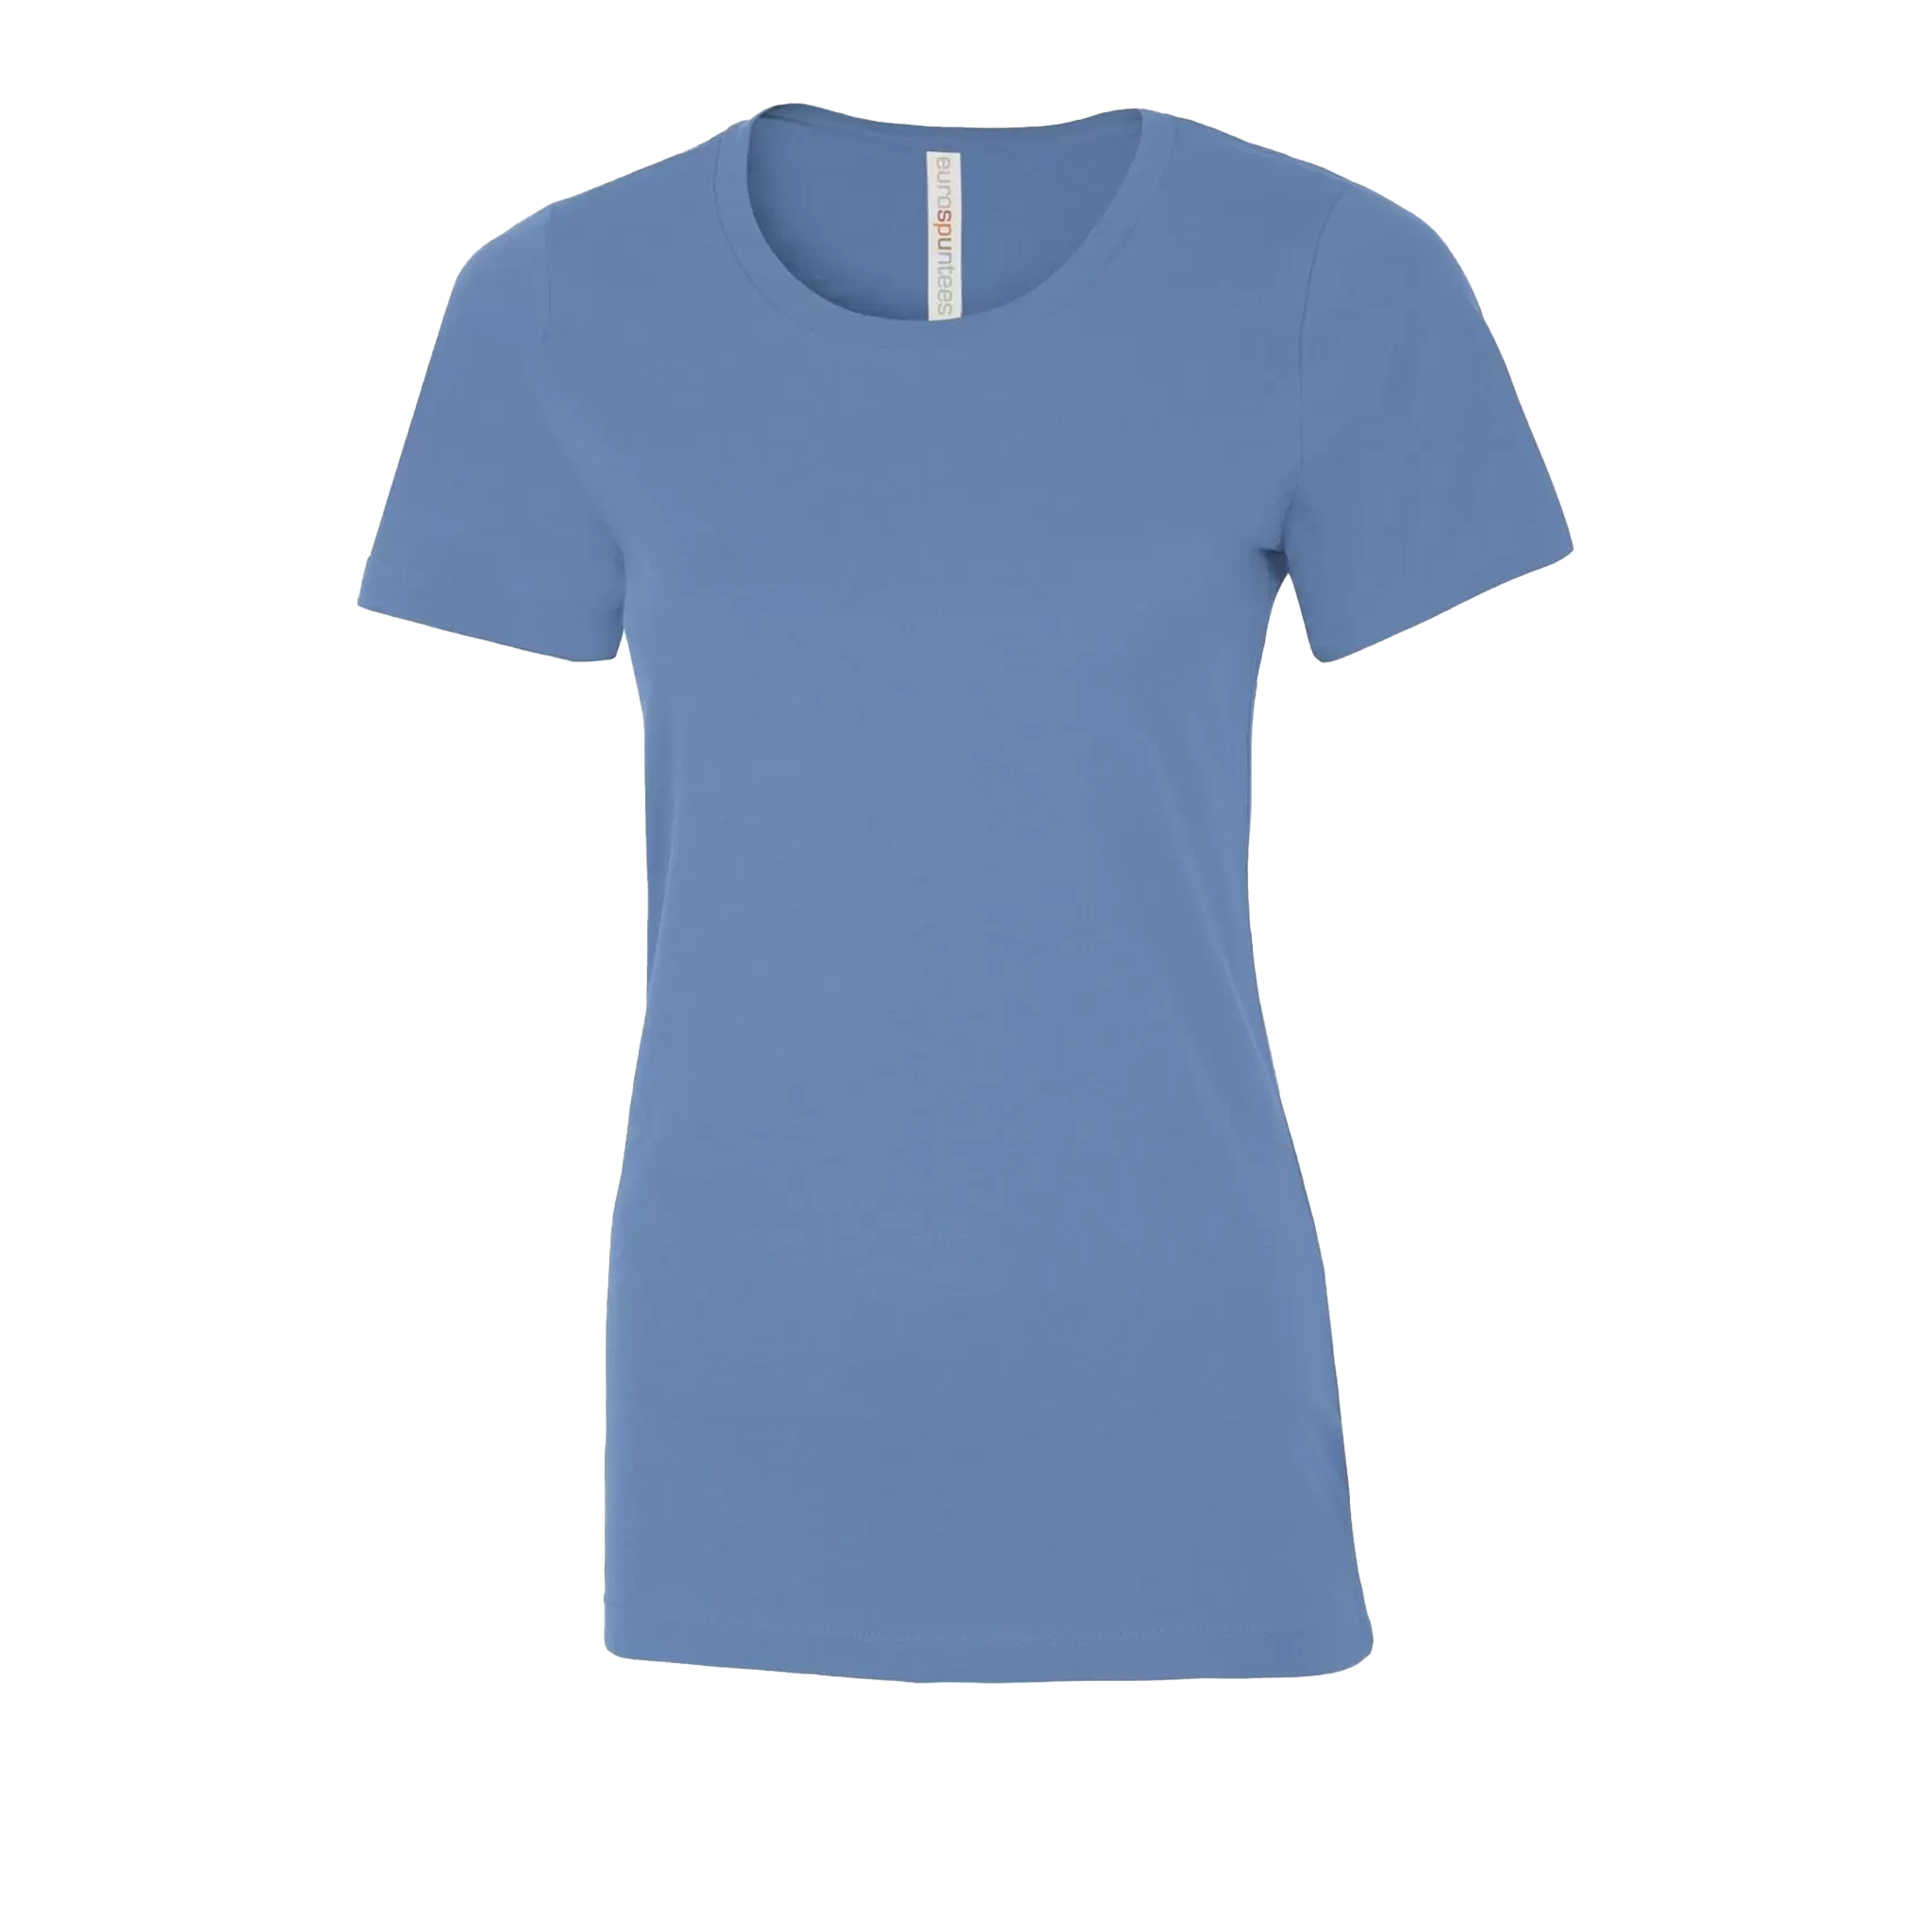 ATC Eurospun Ring Spun T-Shirt - Women's Sizing XS-4XL - Blue